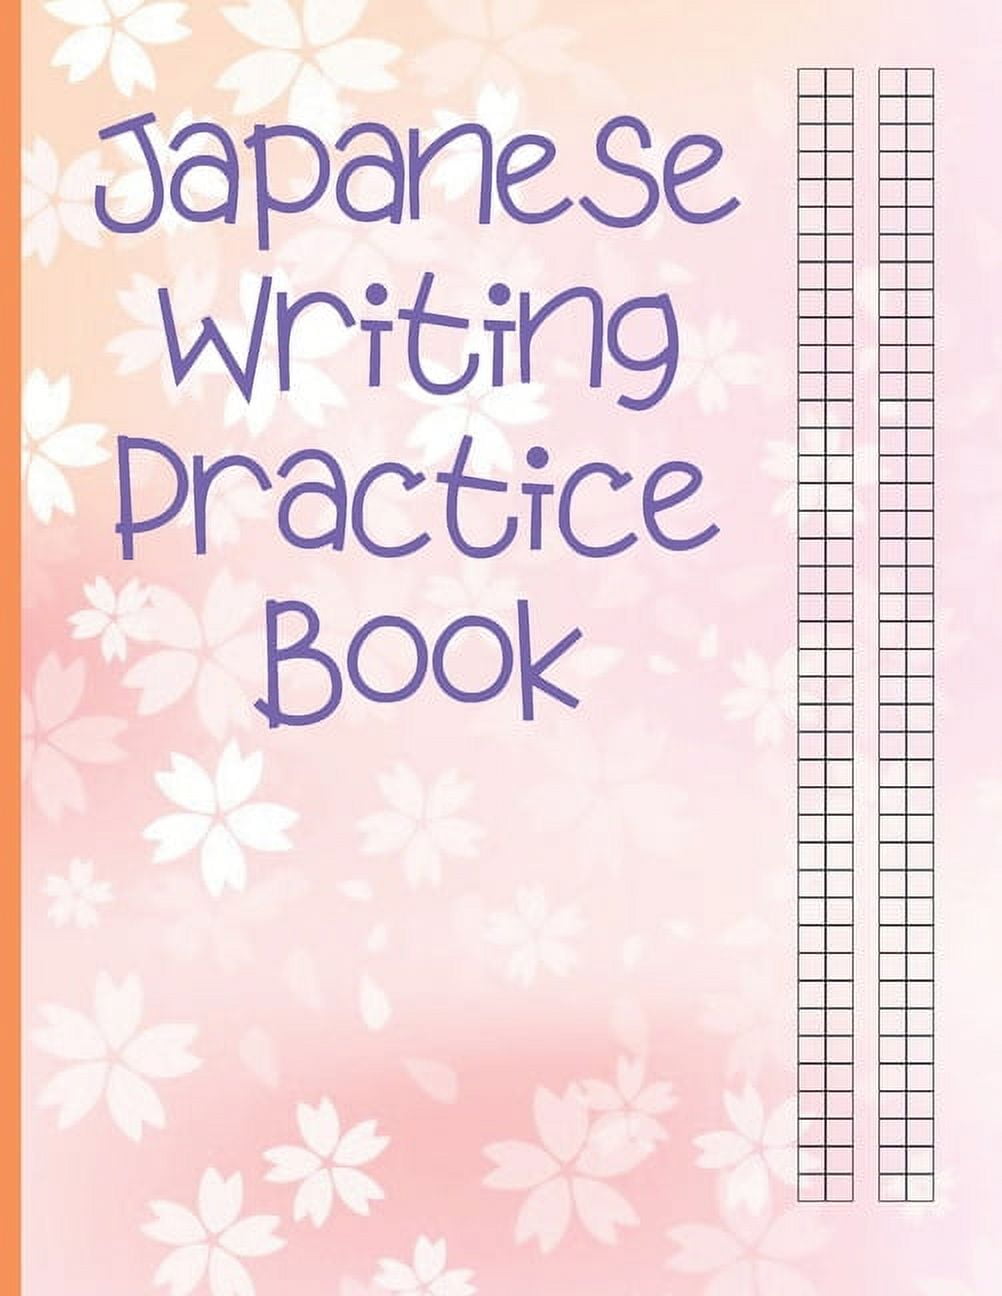 Japanese Writing Practice Book: Kanji ( Genkoyoshi) Paper .5 Squares for  Kanji, Katakana, Hiragana, Kana Alphabets for Your Japanese Calligraphy  Pract (Paperback)